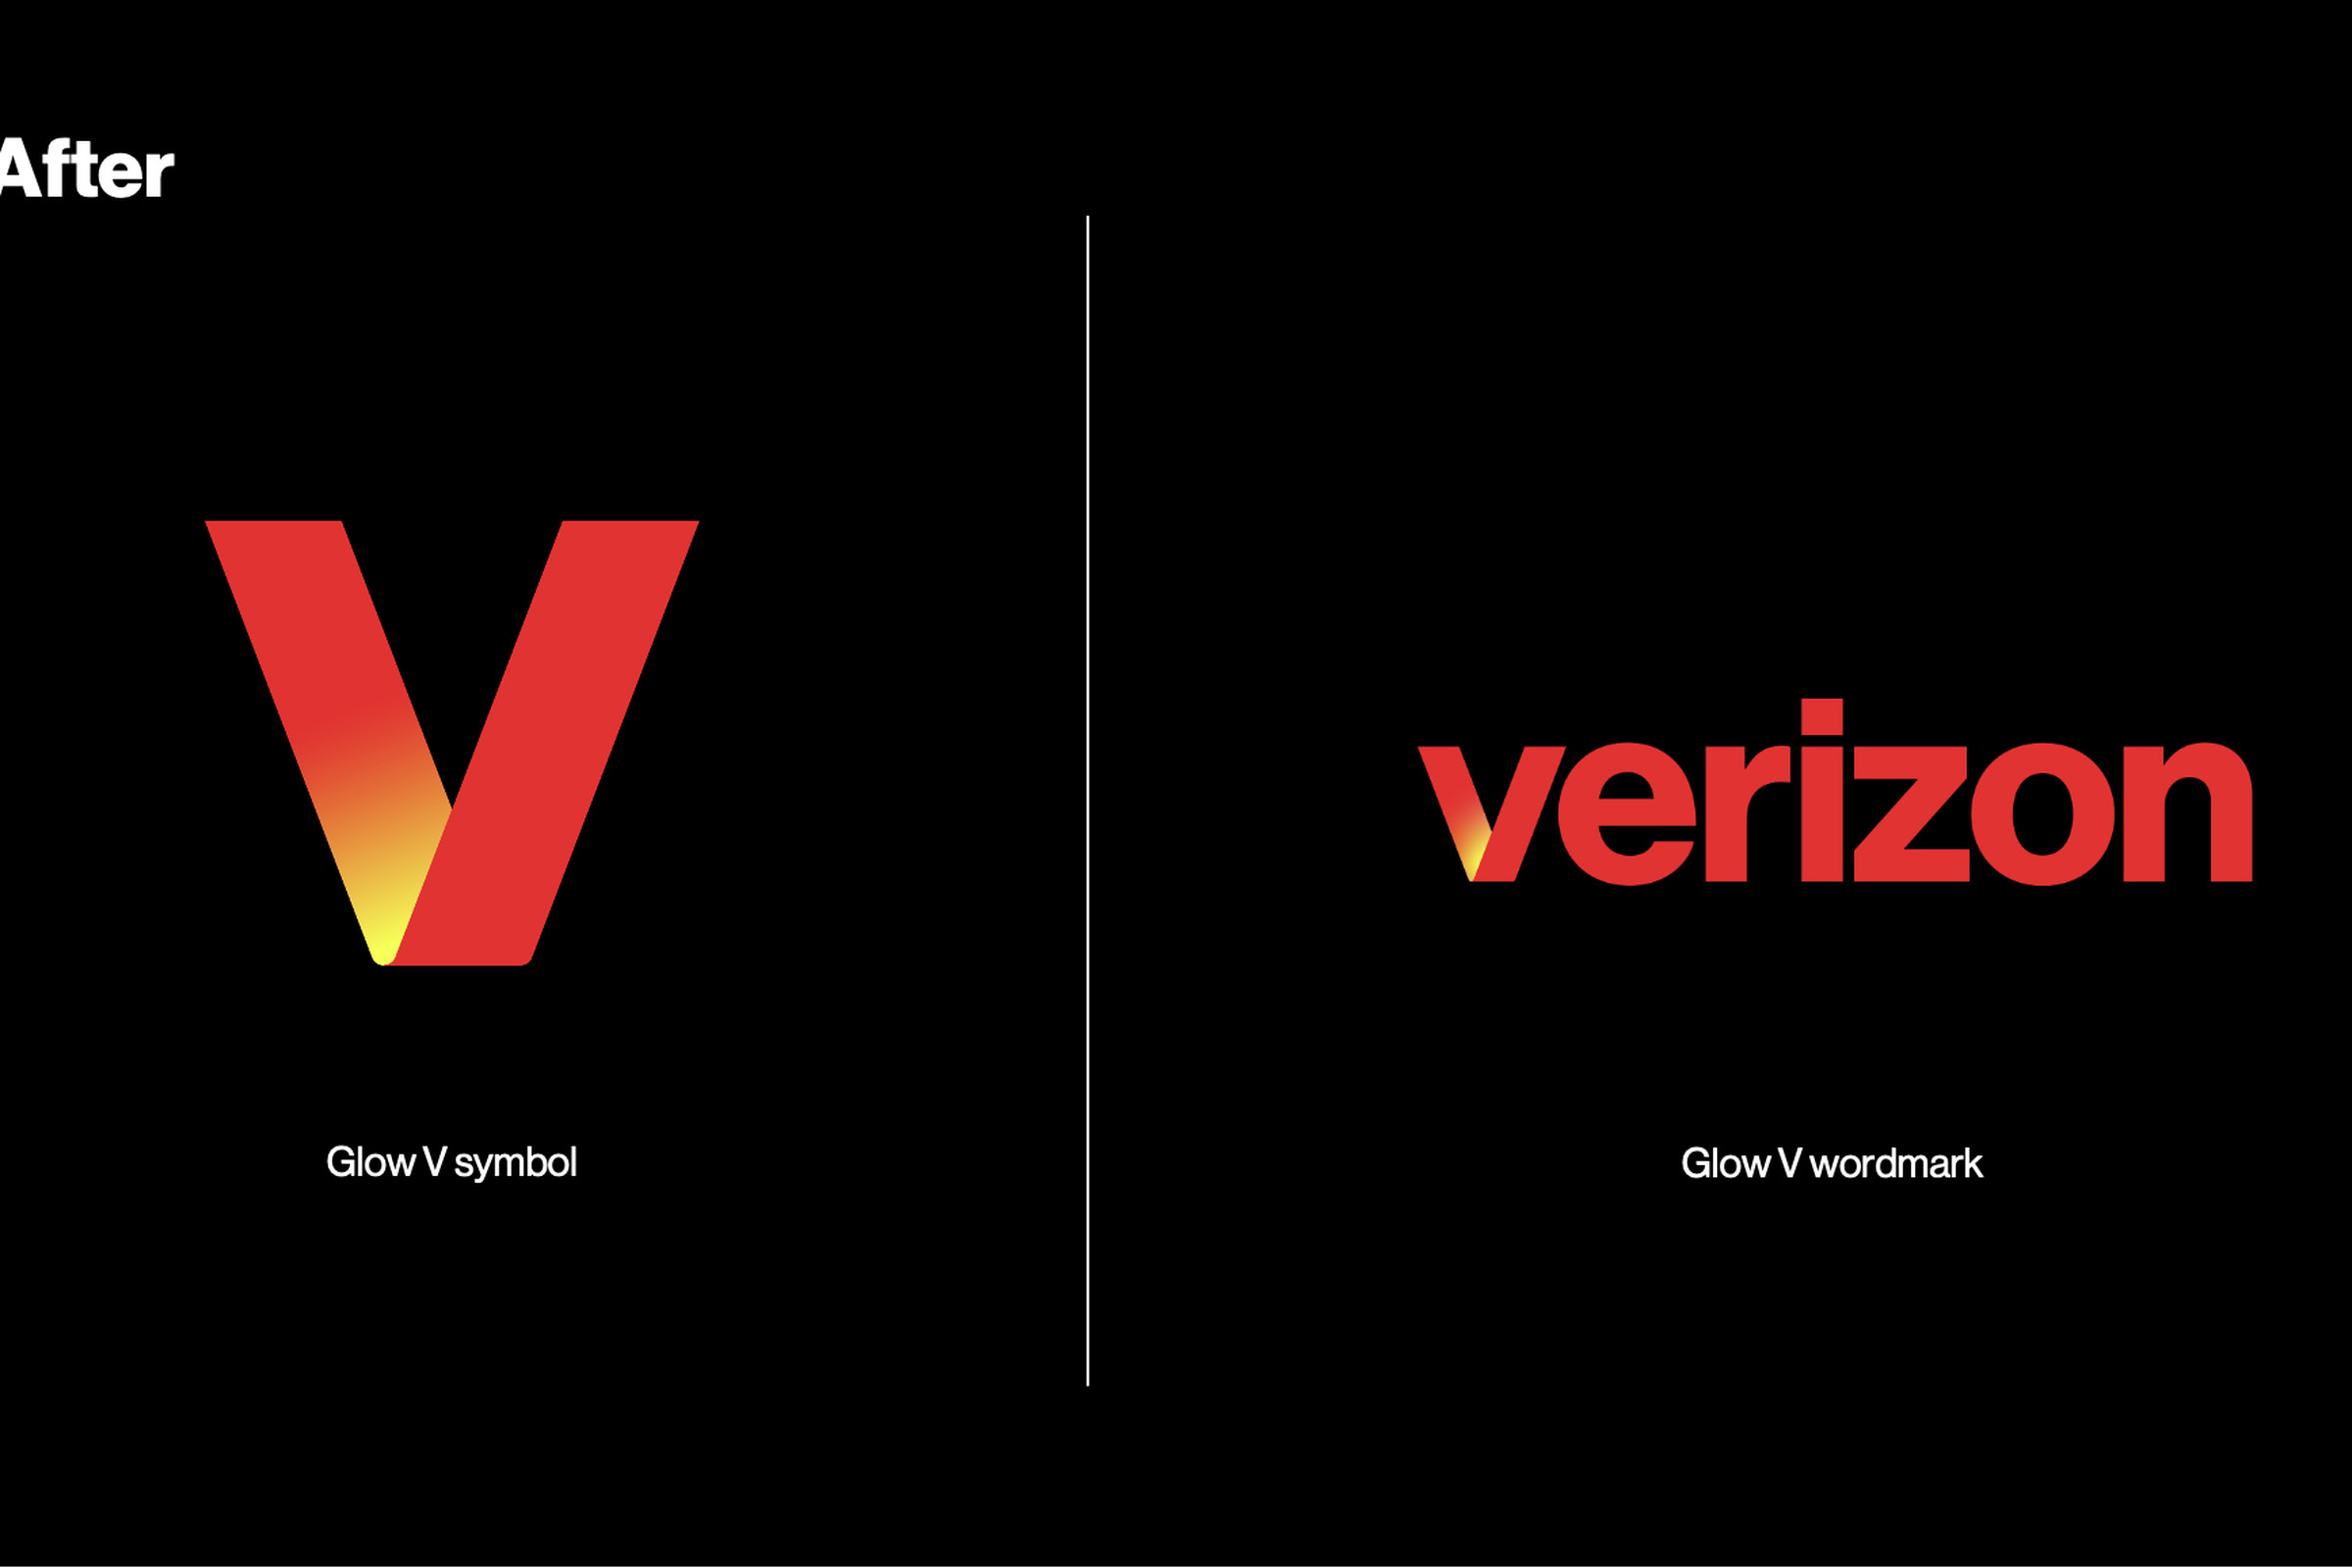 The new V-shaped logo next to the name Verizon.